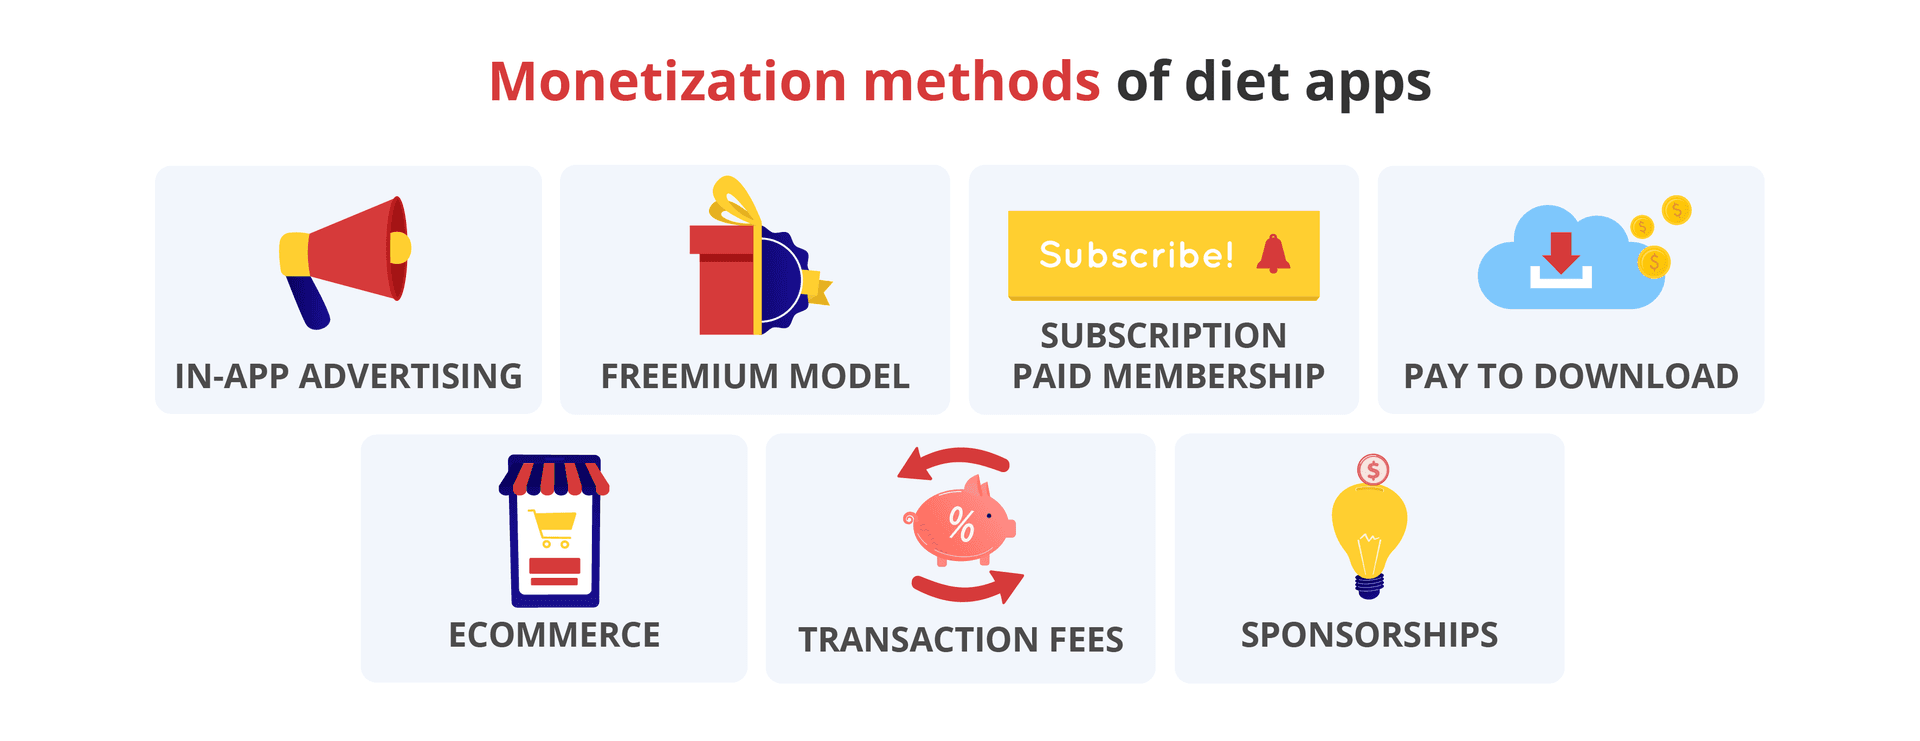 Nutrition planning app monetization methods